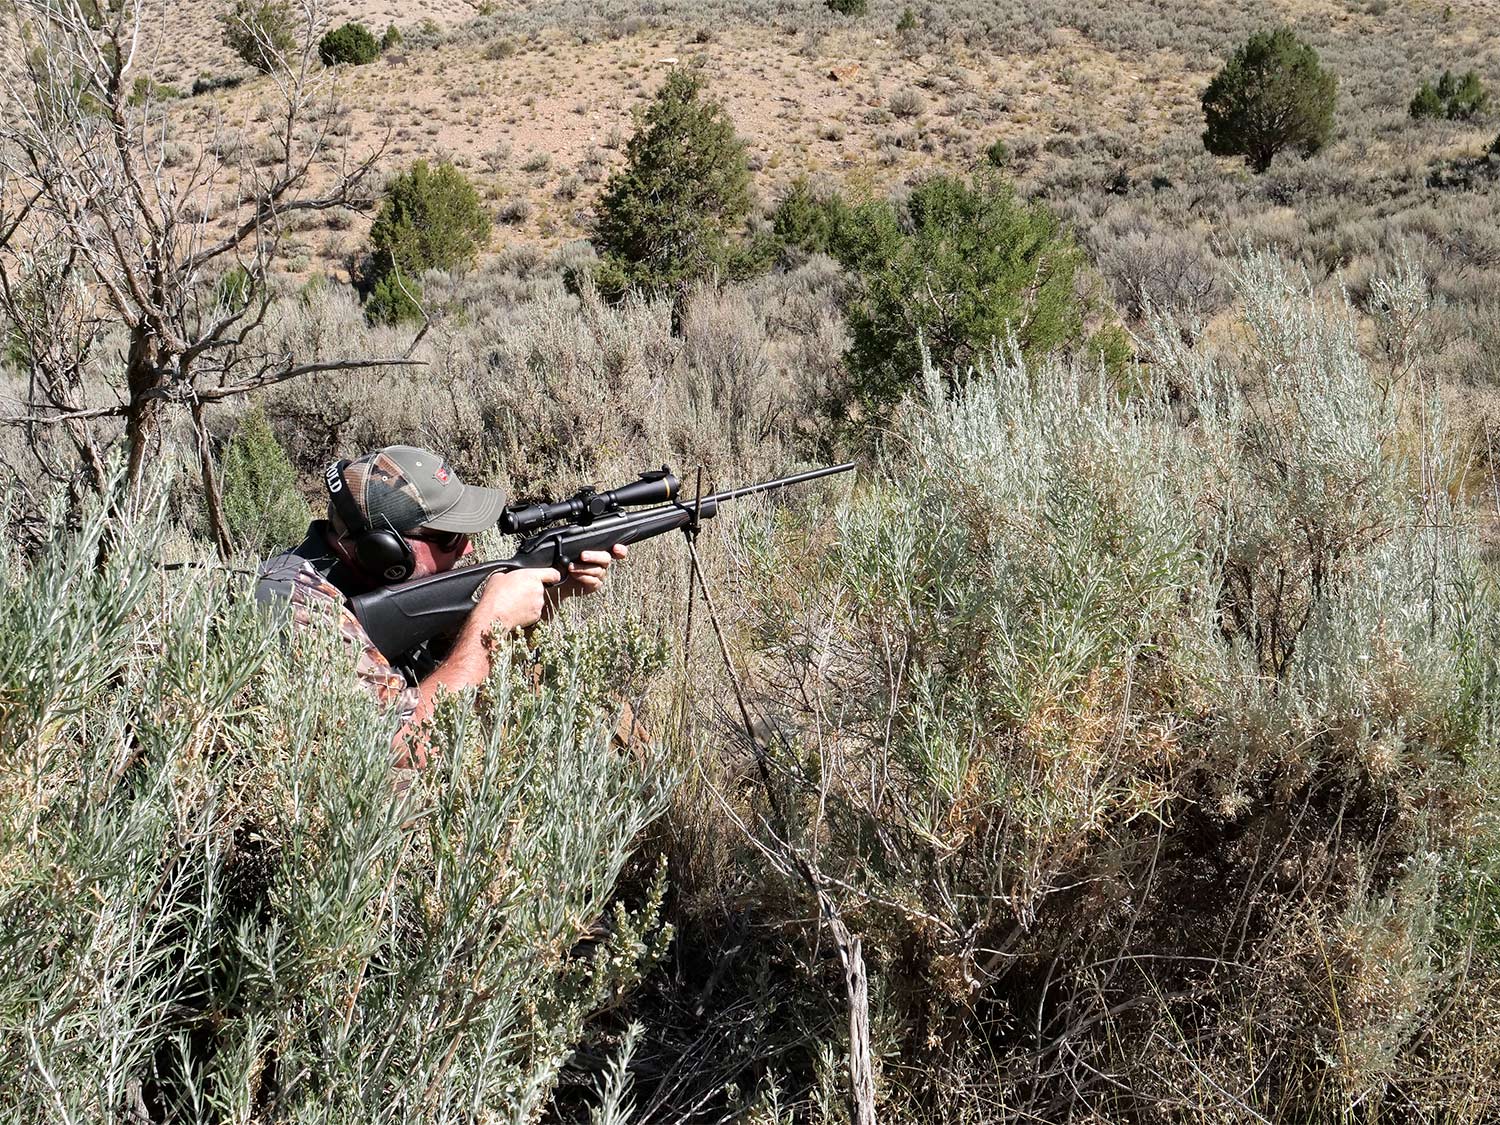 A concealed hunter inn camo aims a rifle in a field.